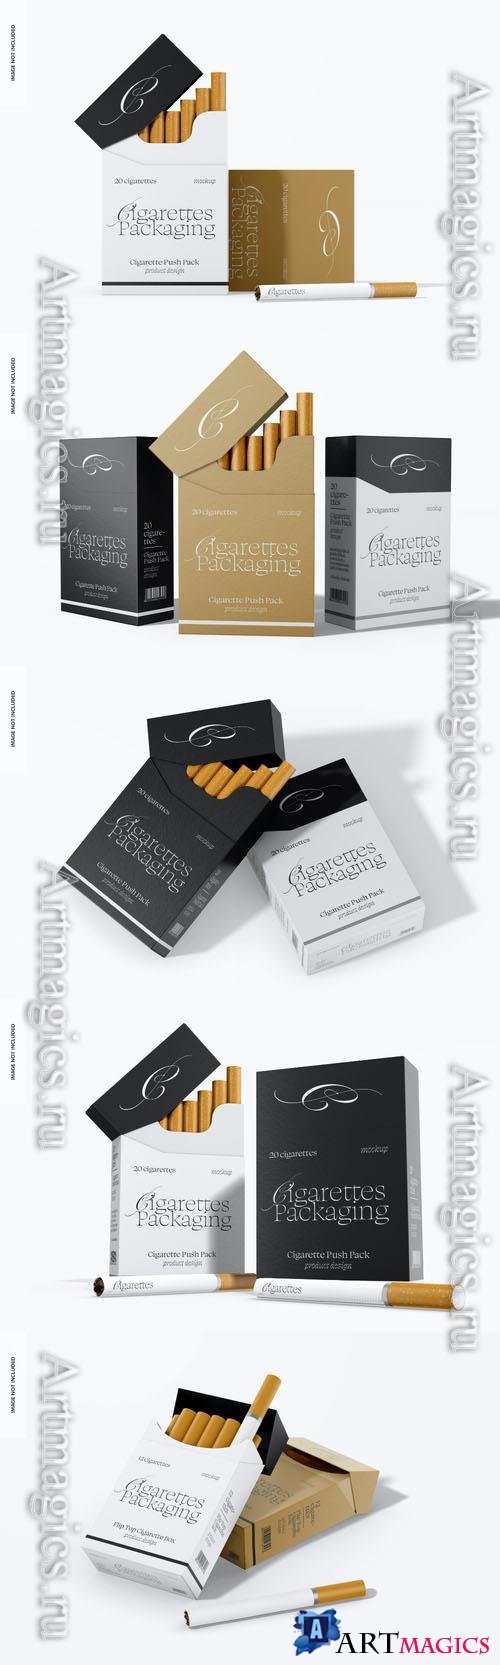 Cigarette push pack psd template mockup design